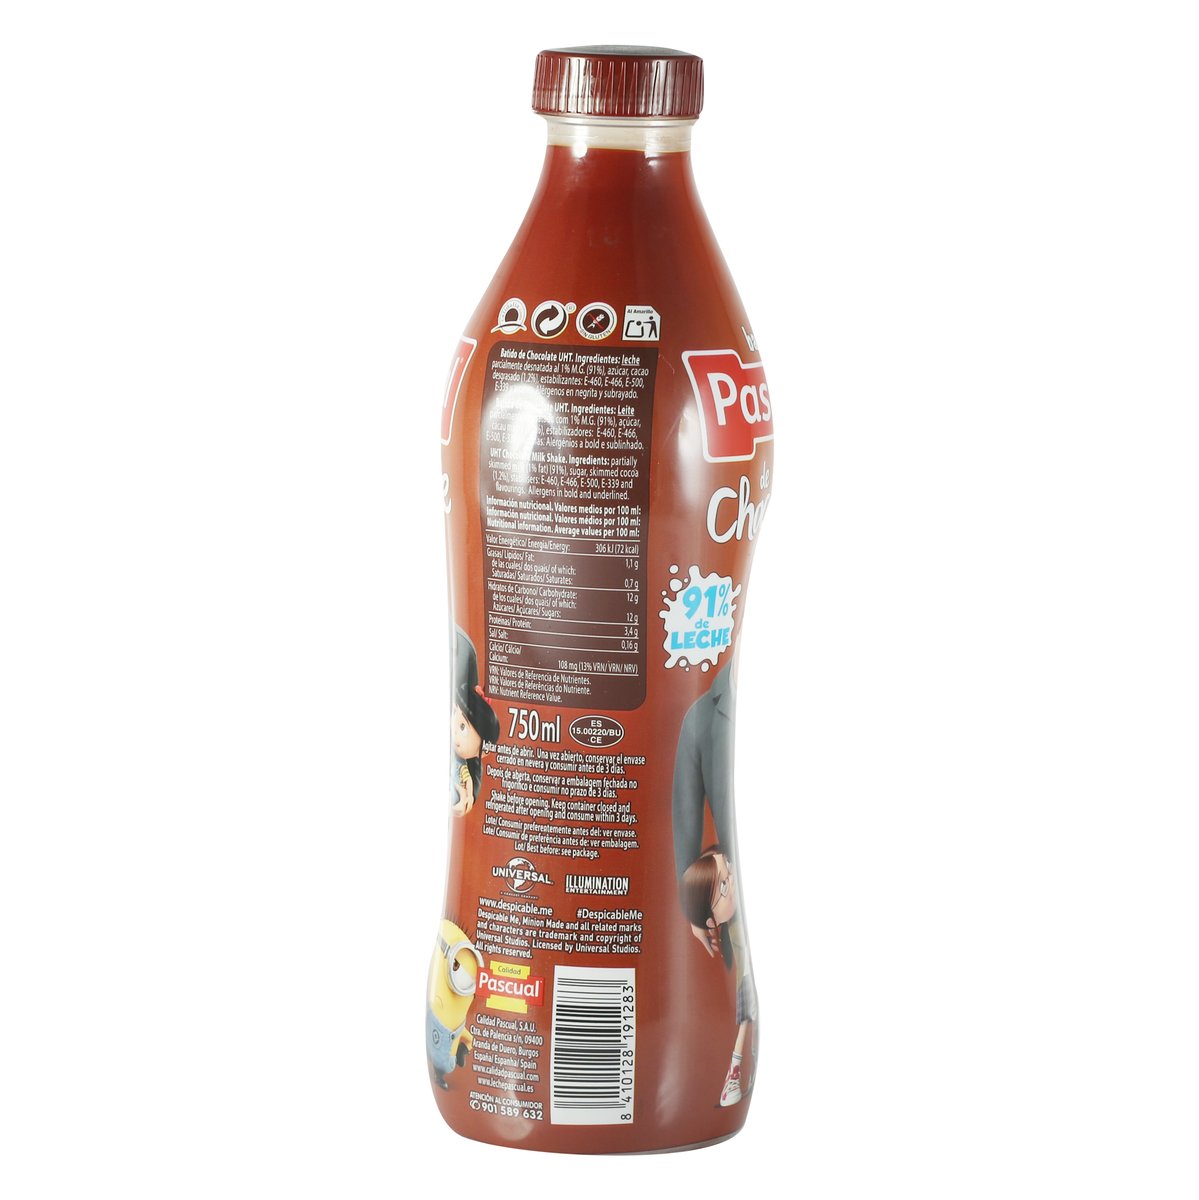 Pascual Chocolate Milk Shake 750ml